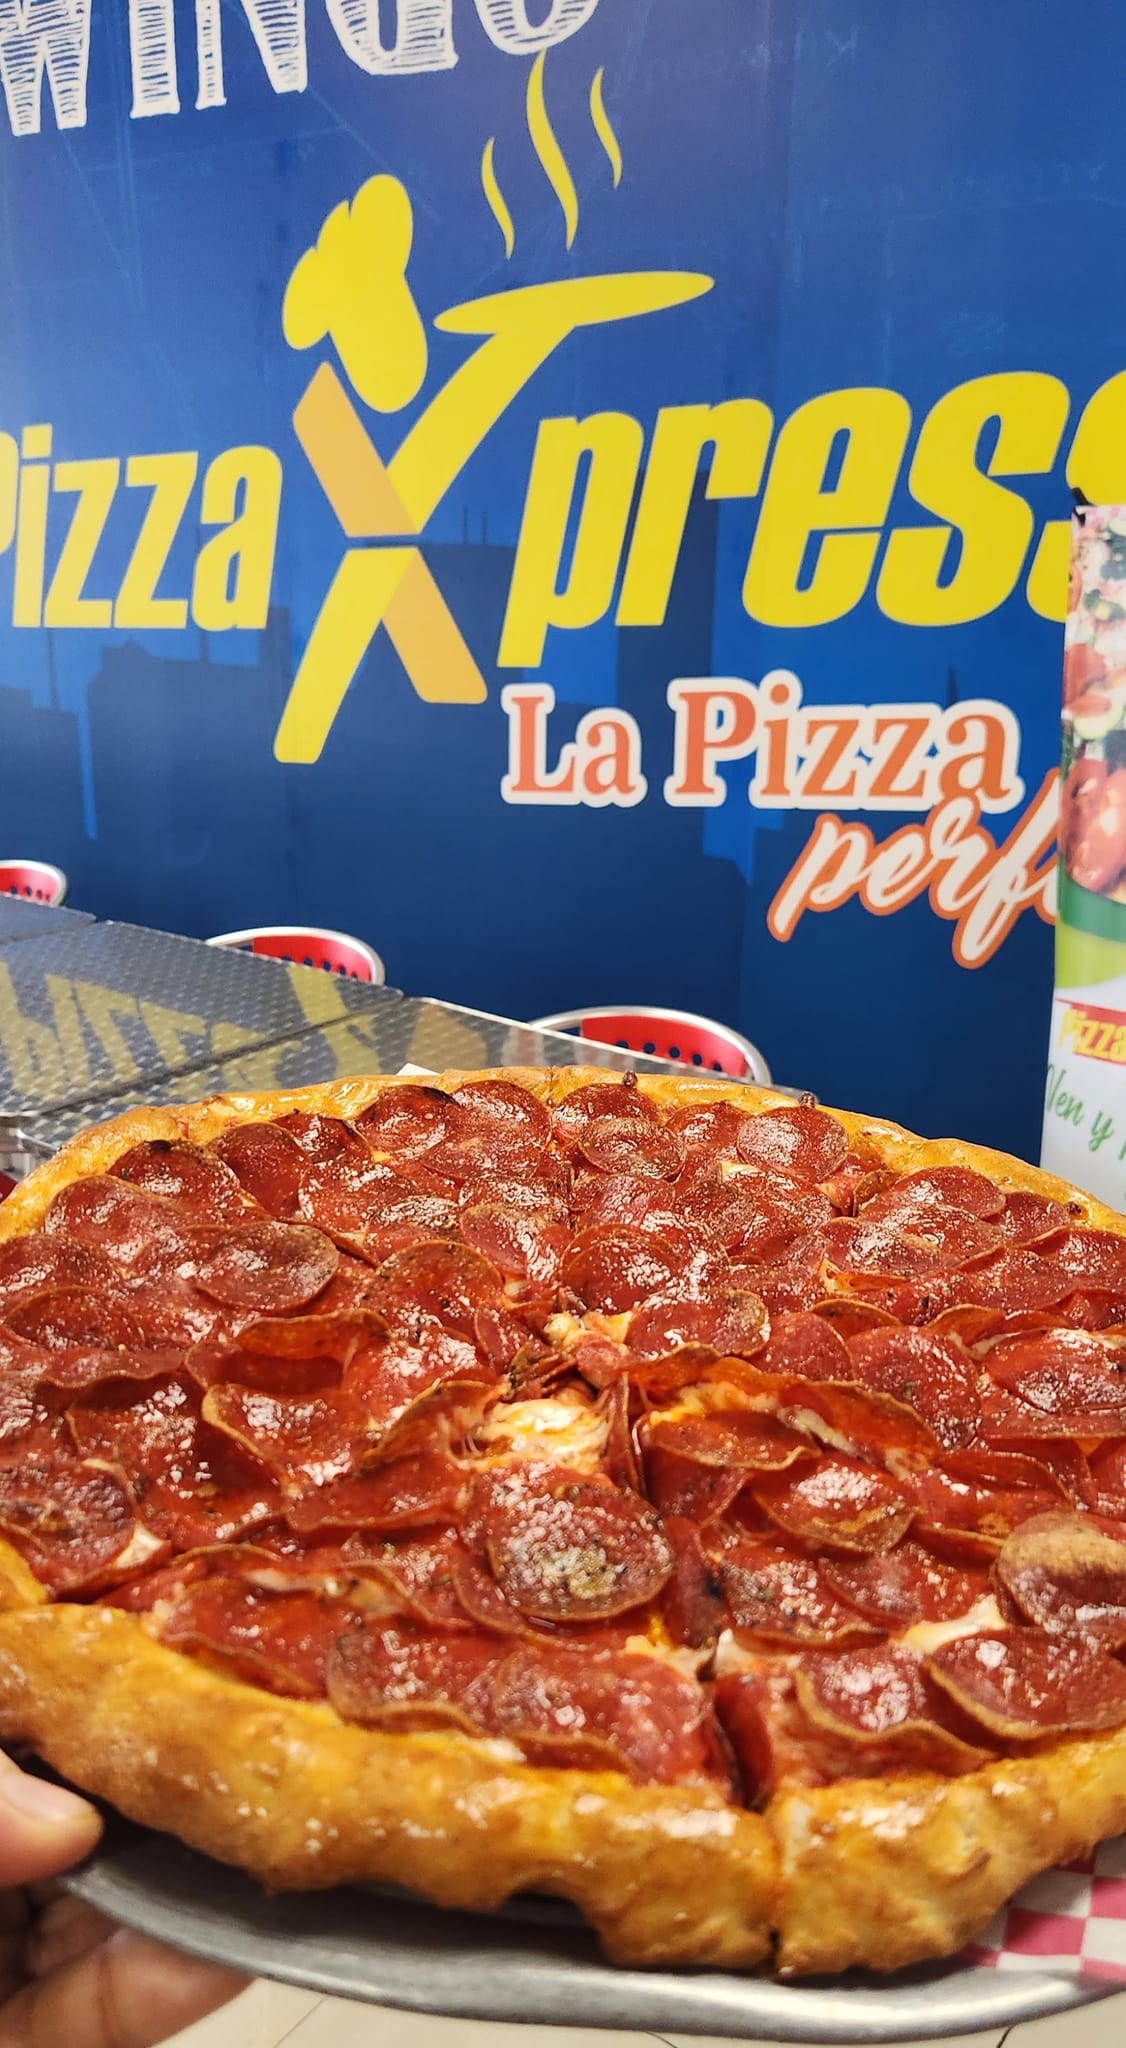 Pizza Xpress Elsa-Edcouch La Pizza Perfecta